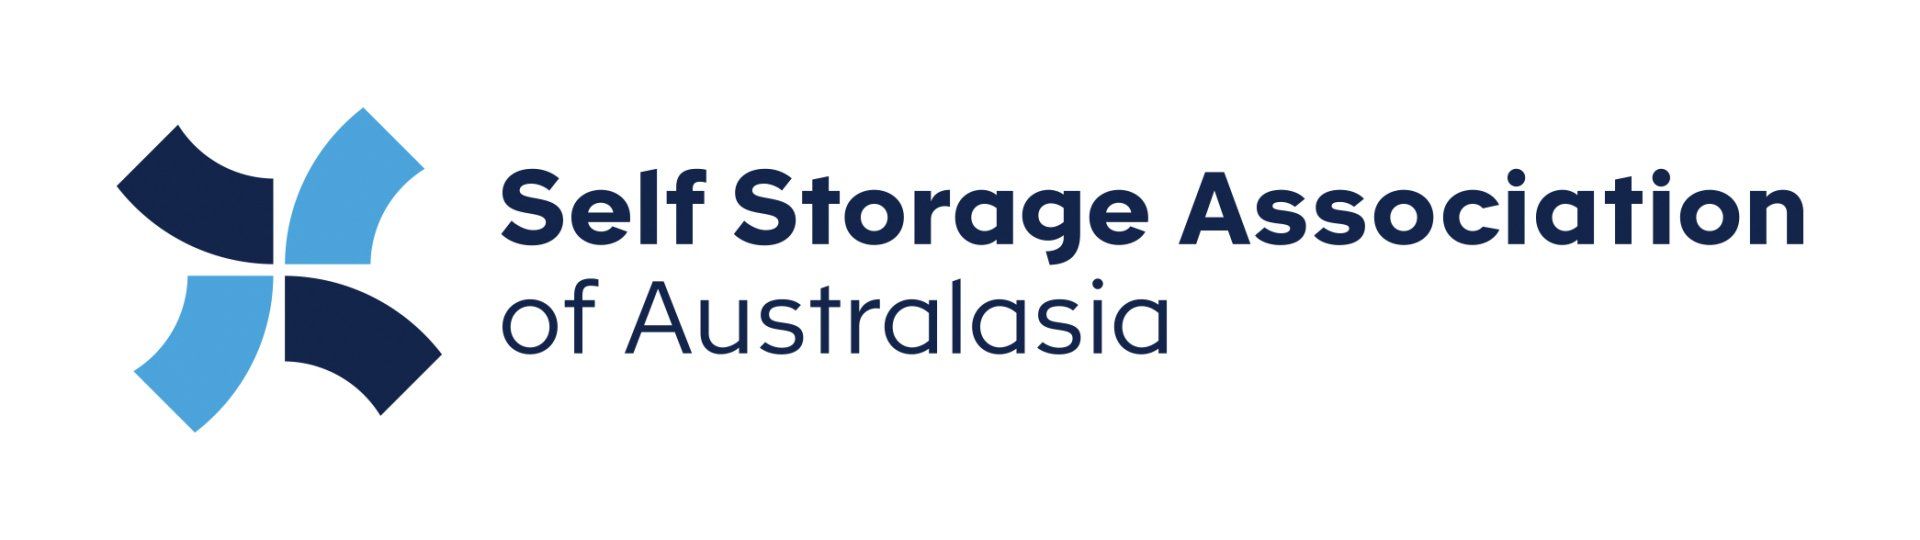 self storage association of australia logo